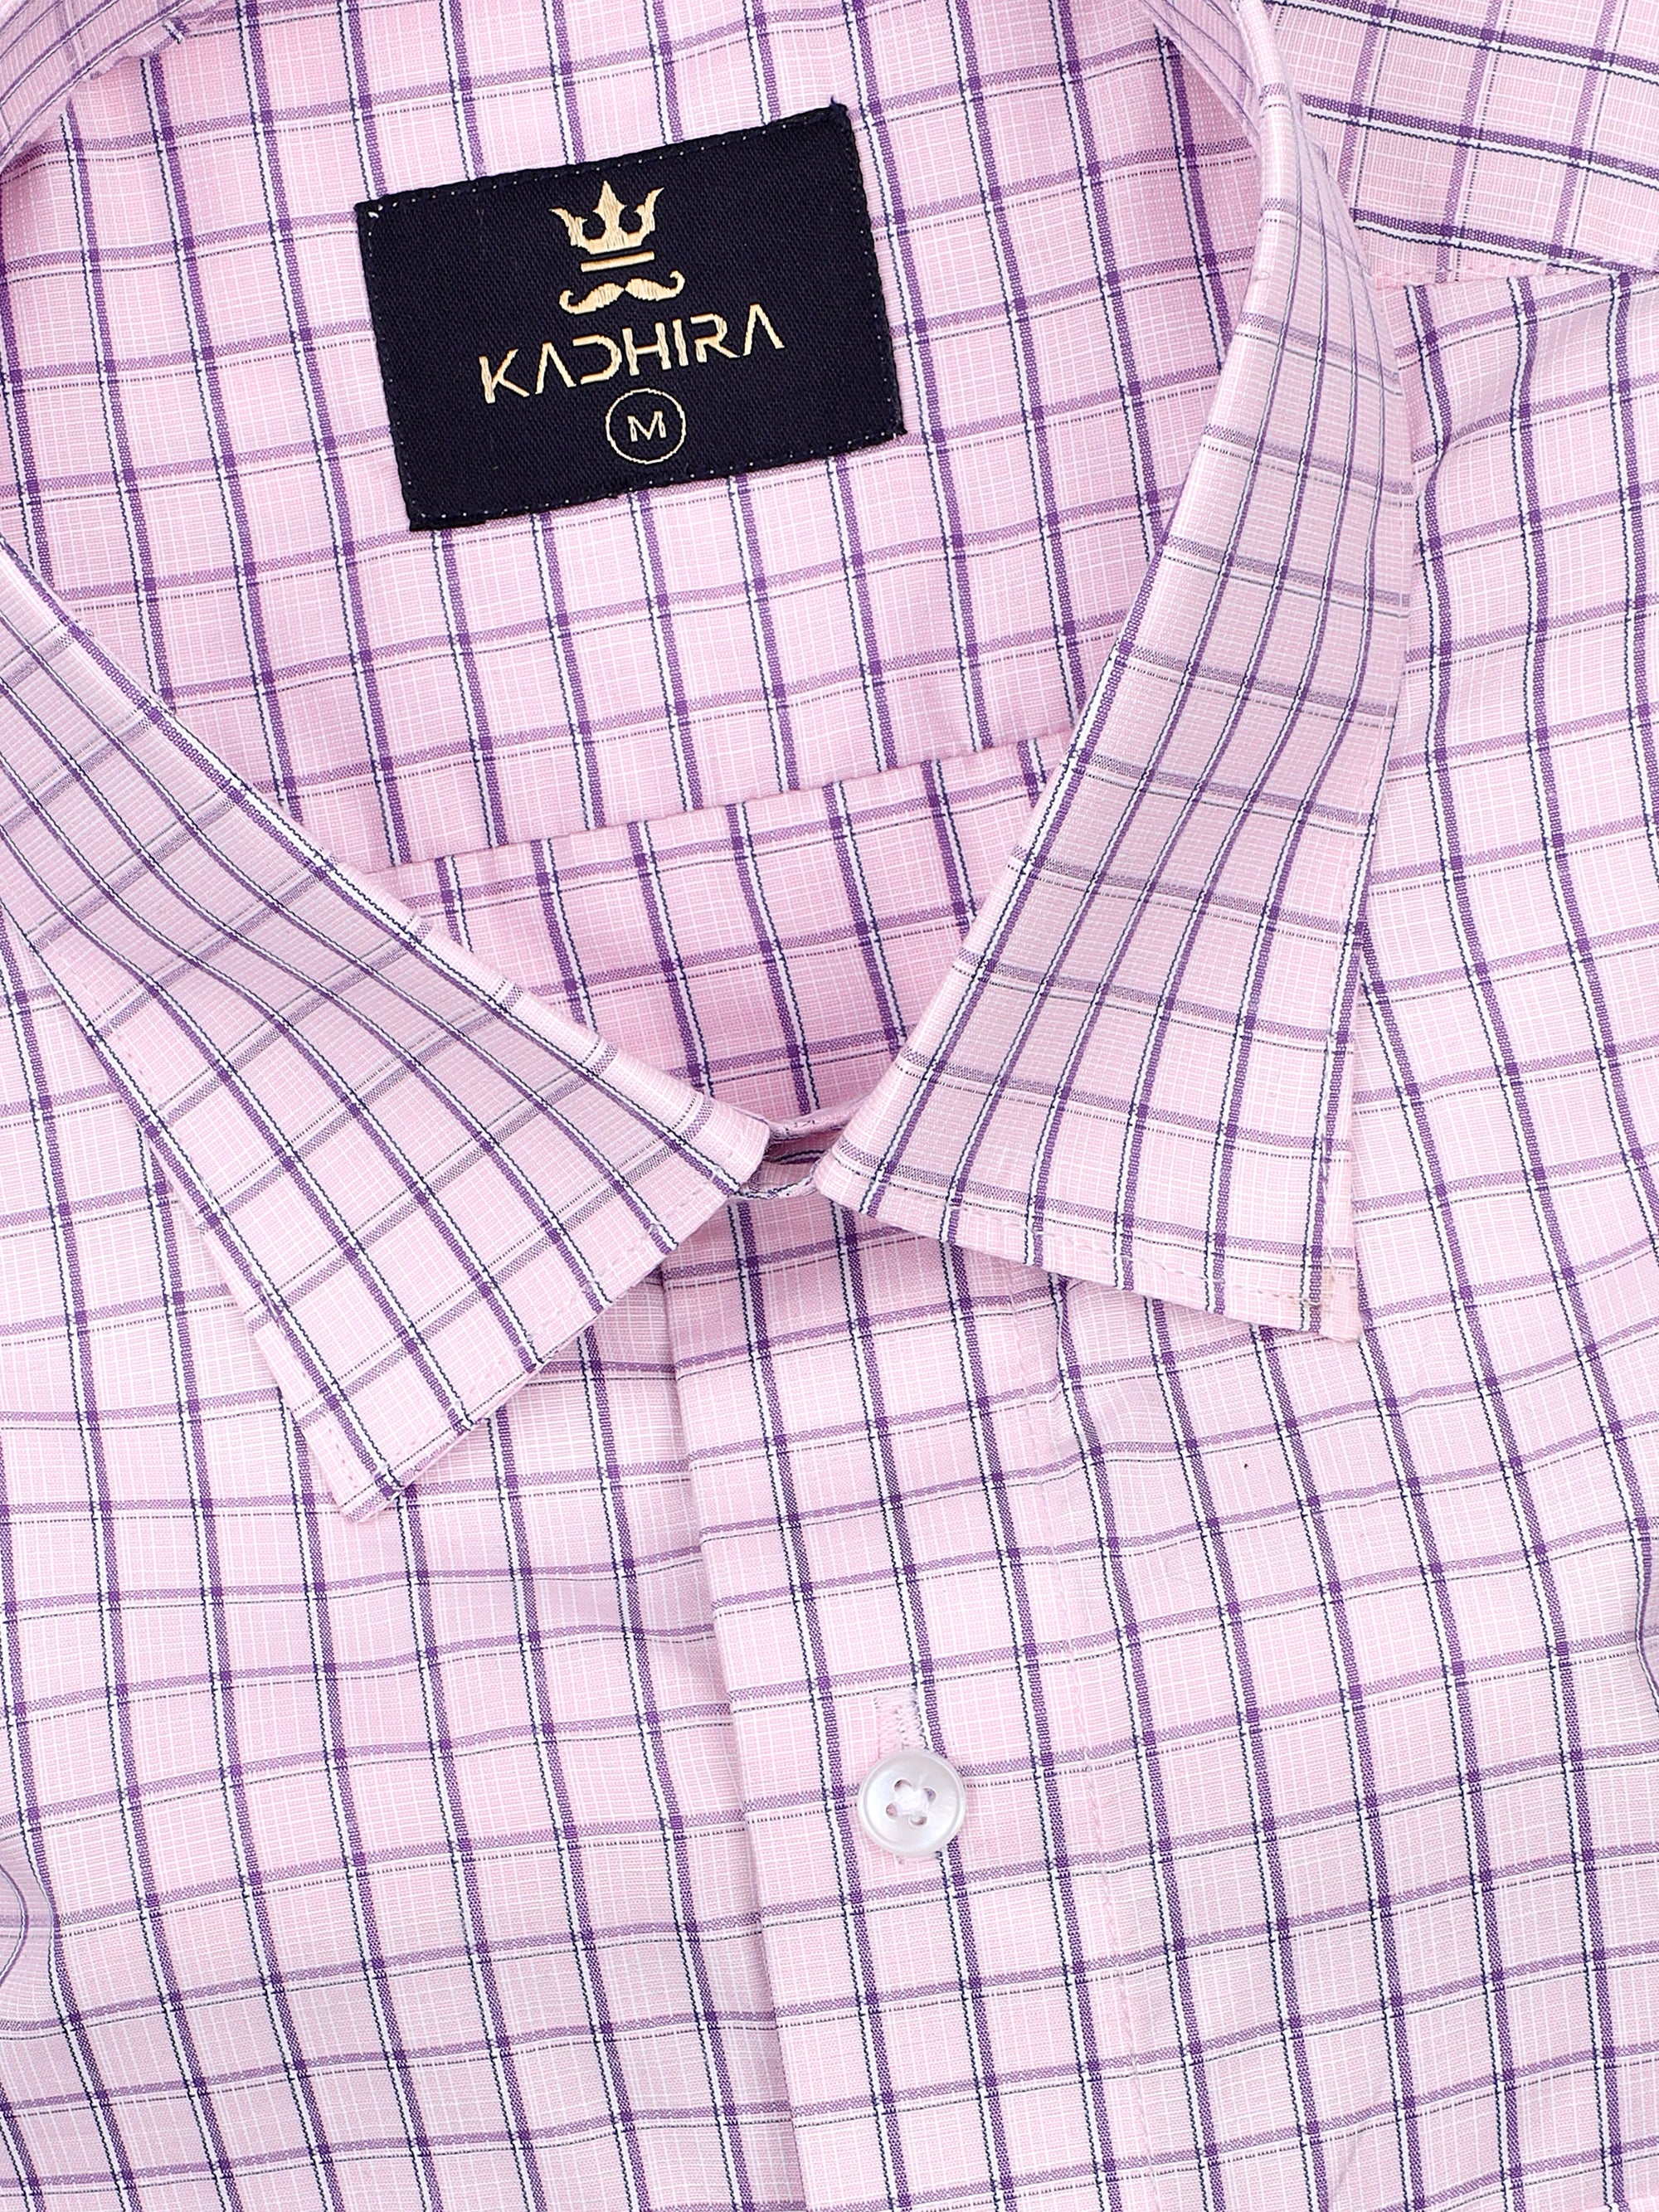 Millennial Pink With Violet- Navy Plaid Check Premium Cotton Shirt